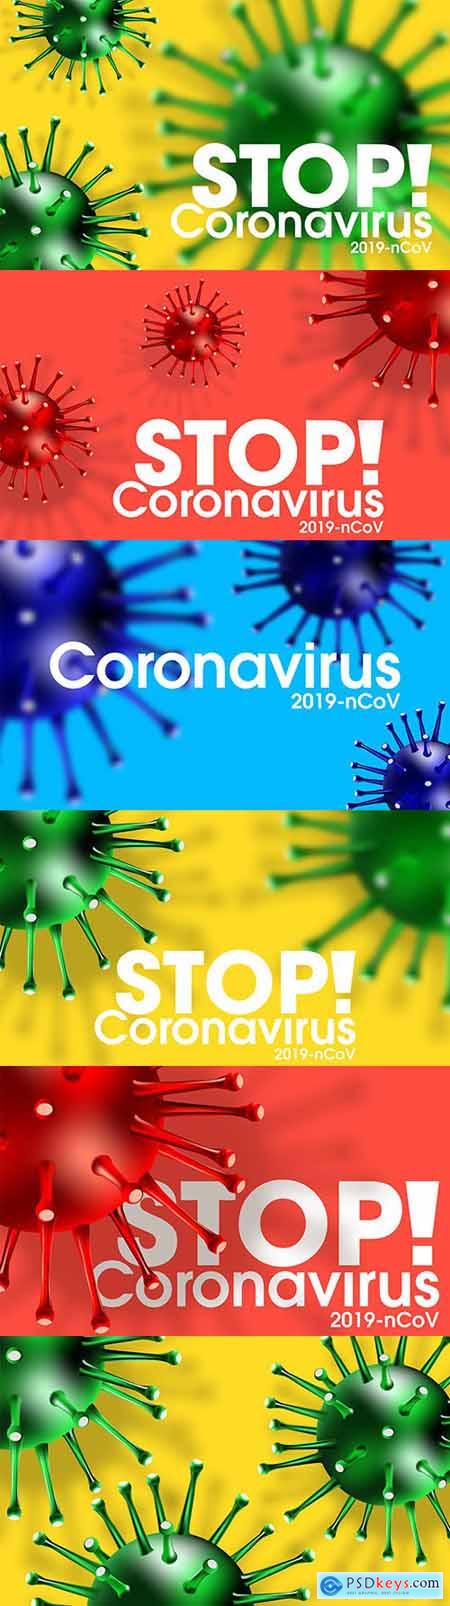 Coronavirus medical realistic illustration from 3d viral cells